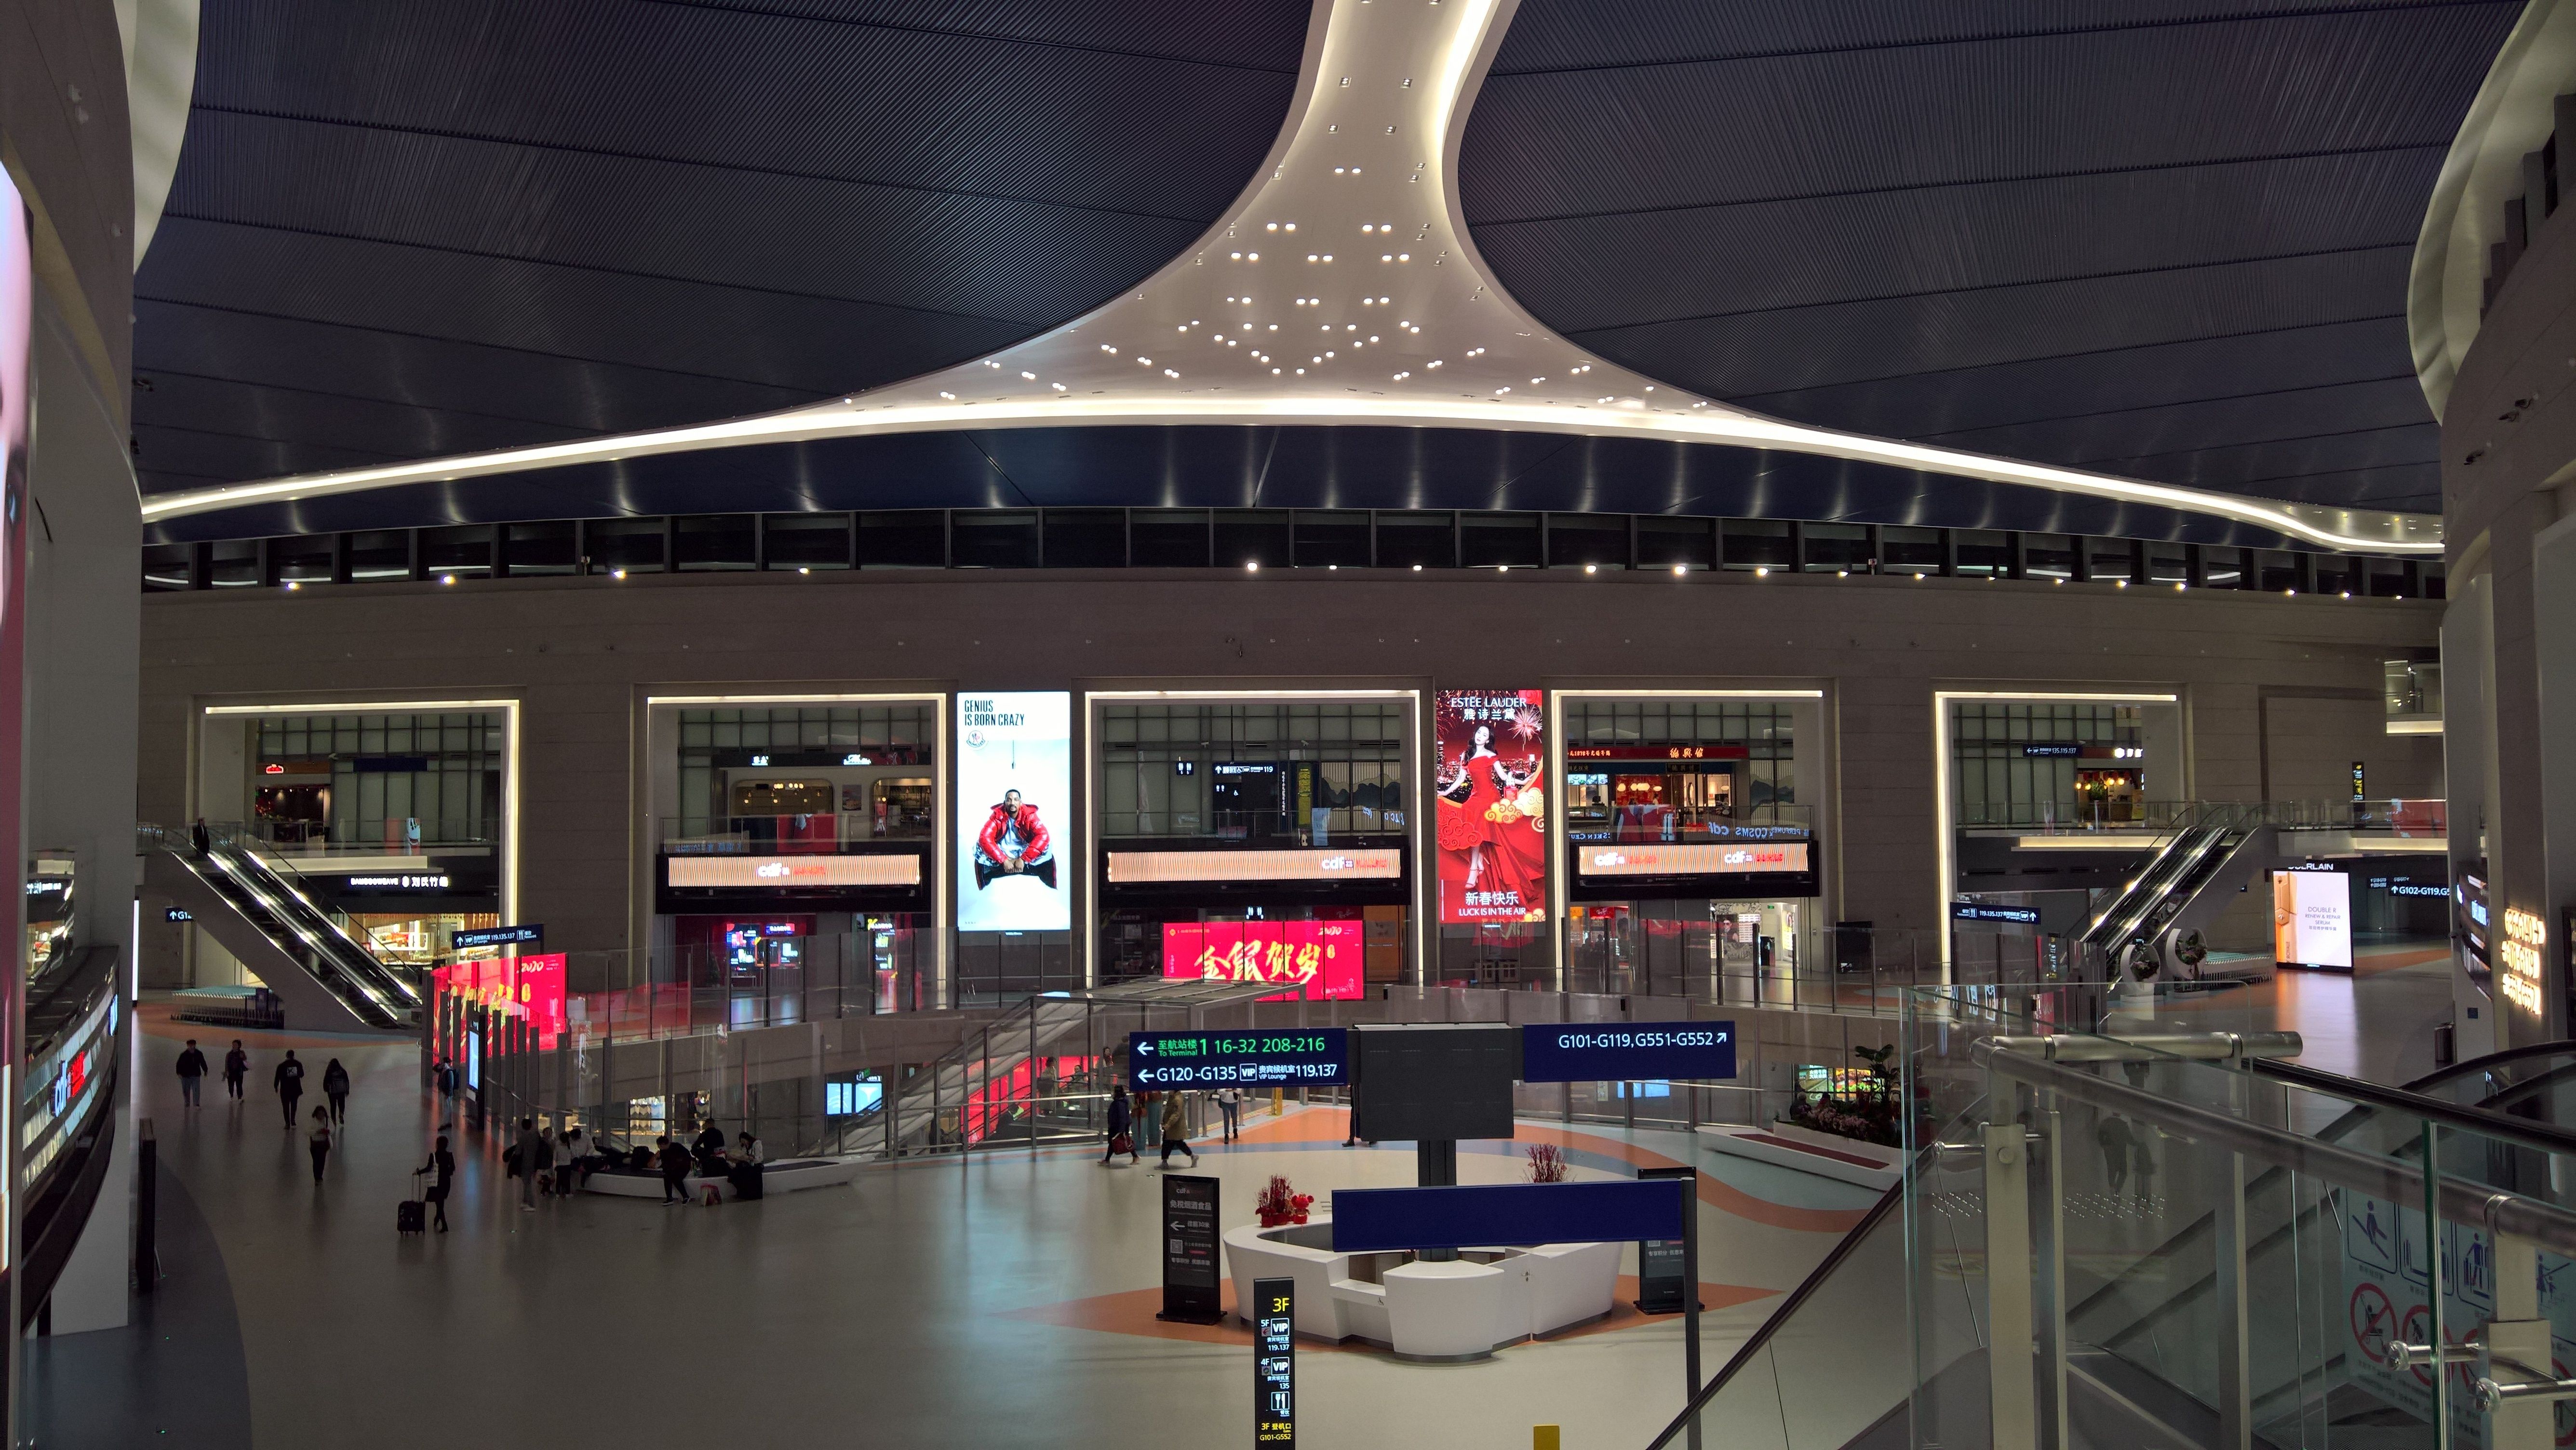 Inside the Shanghai Pudong Satellite Terminal